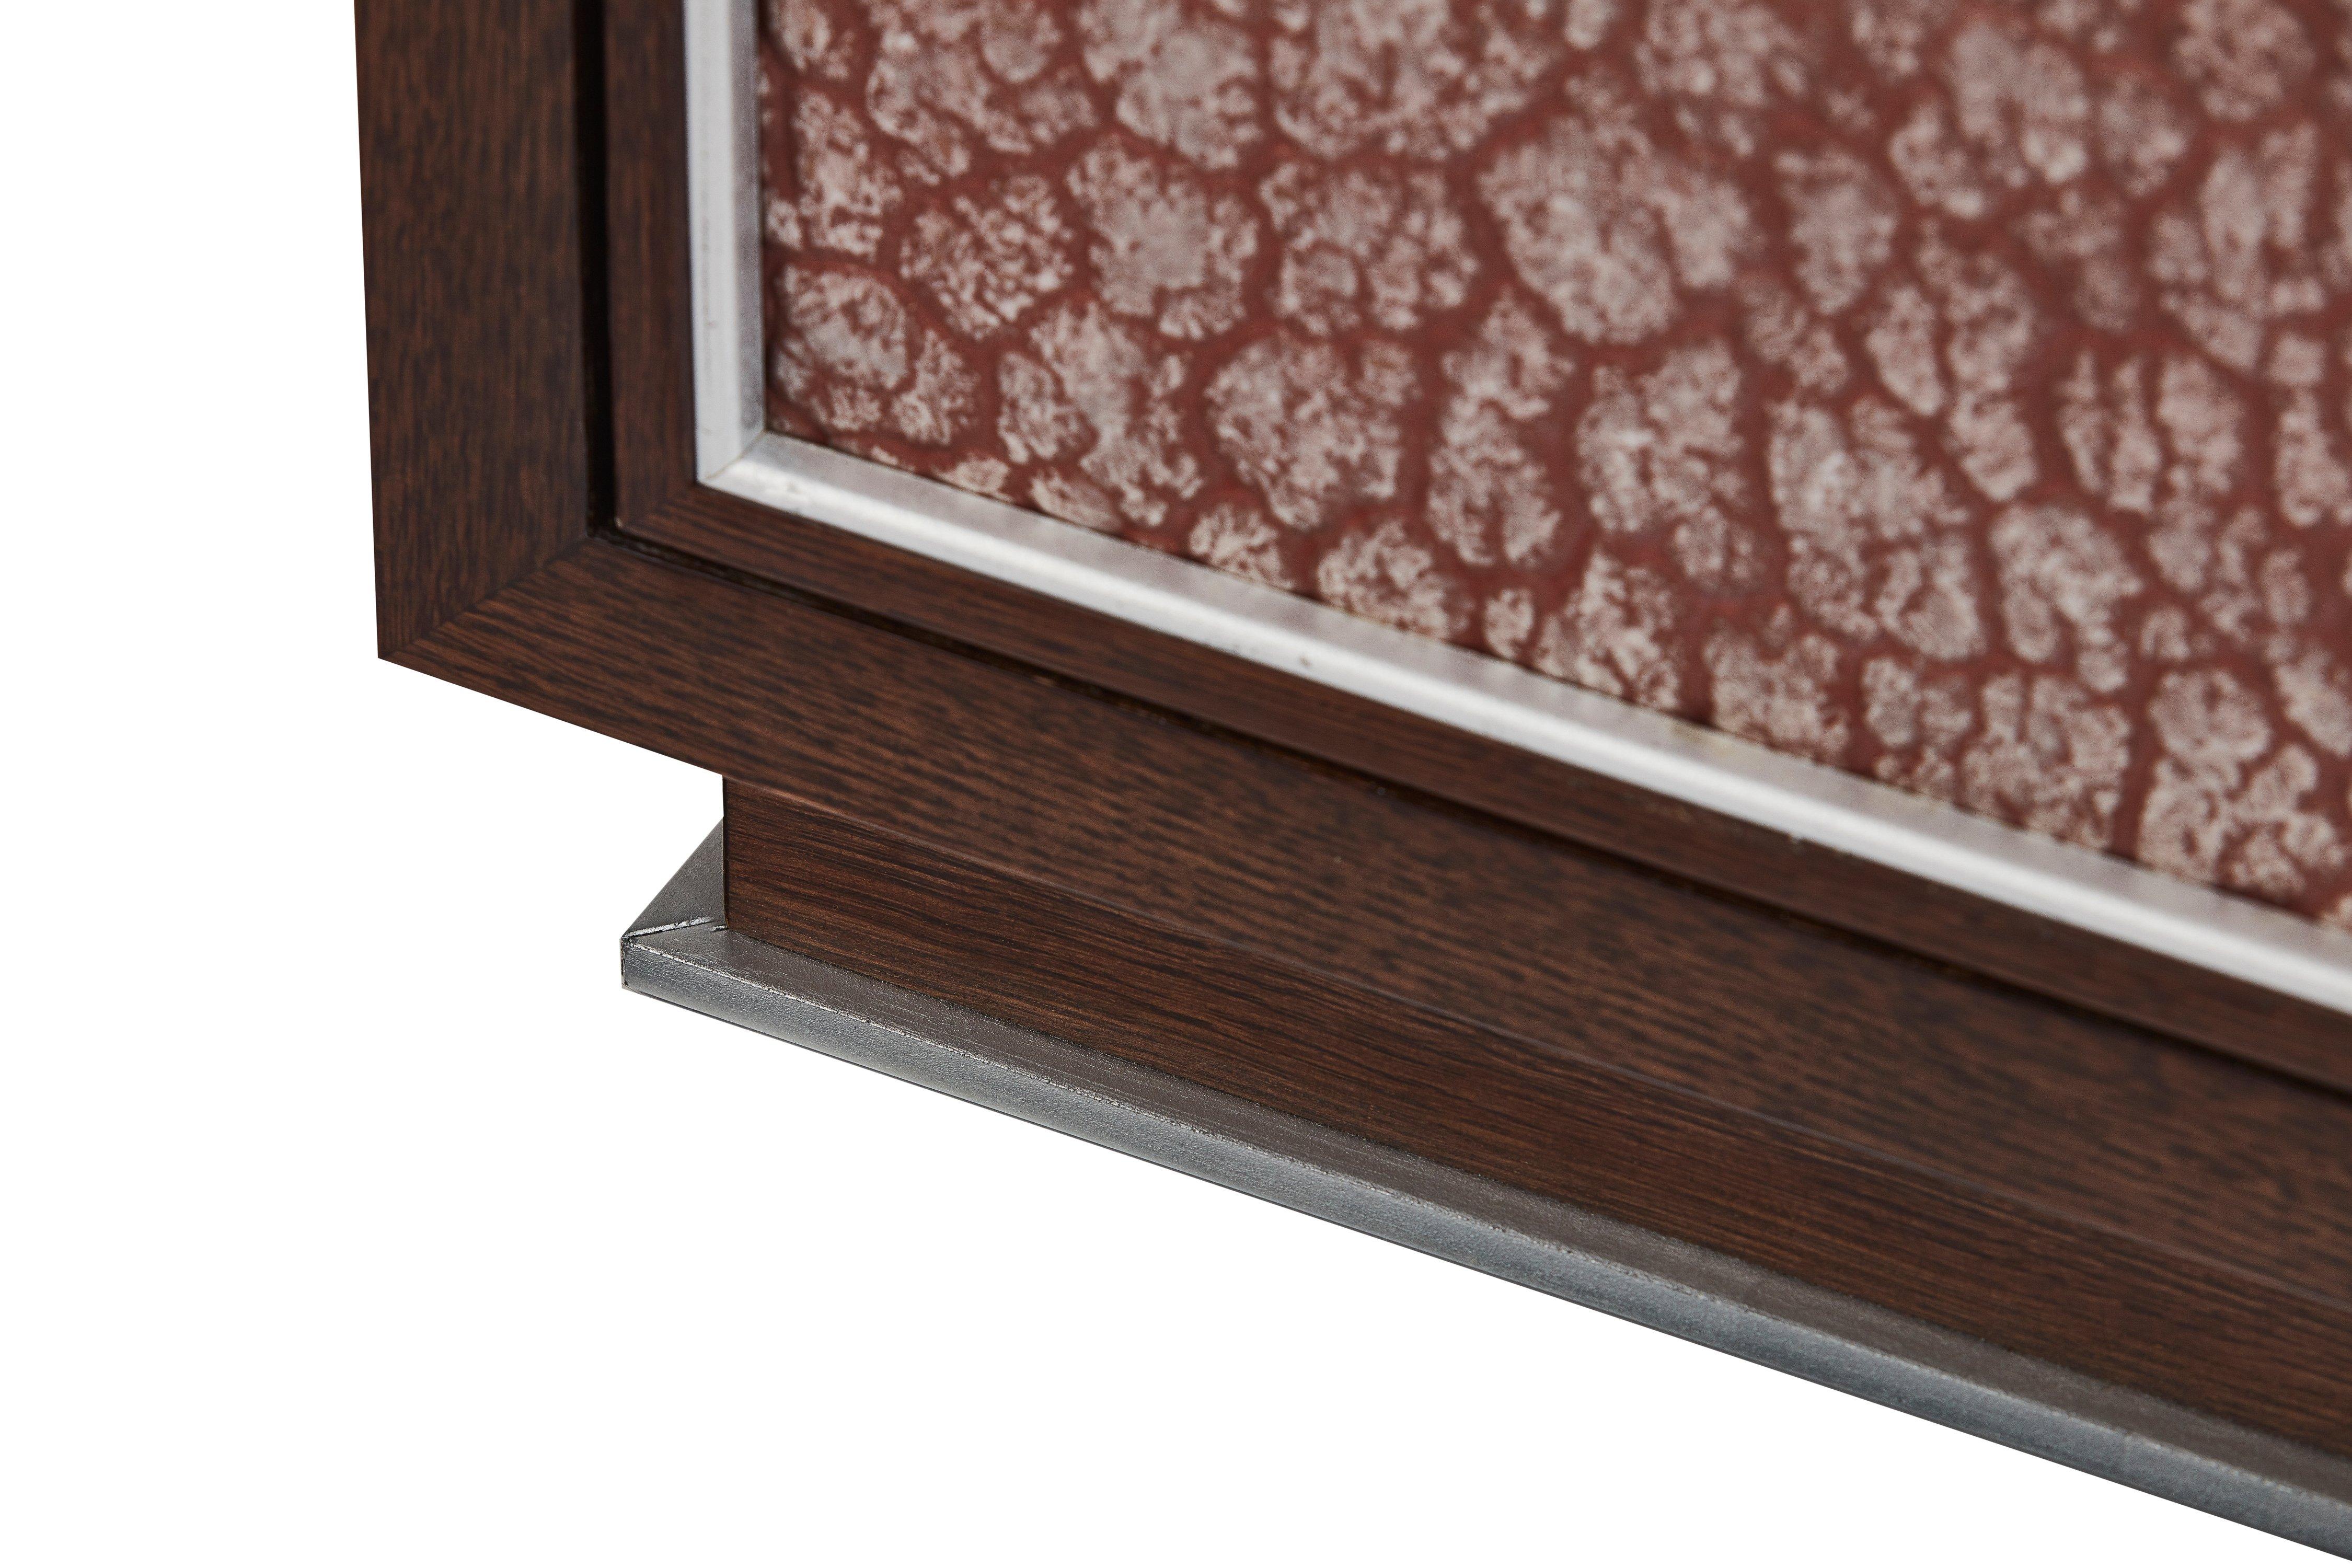 Polish Small Walnut Veneer Cabinet with Decorative Glass Patine Panels, Customizable For Sale